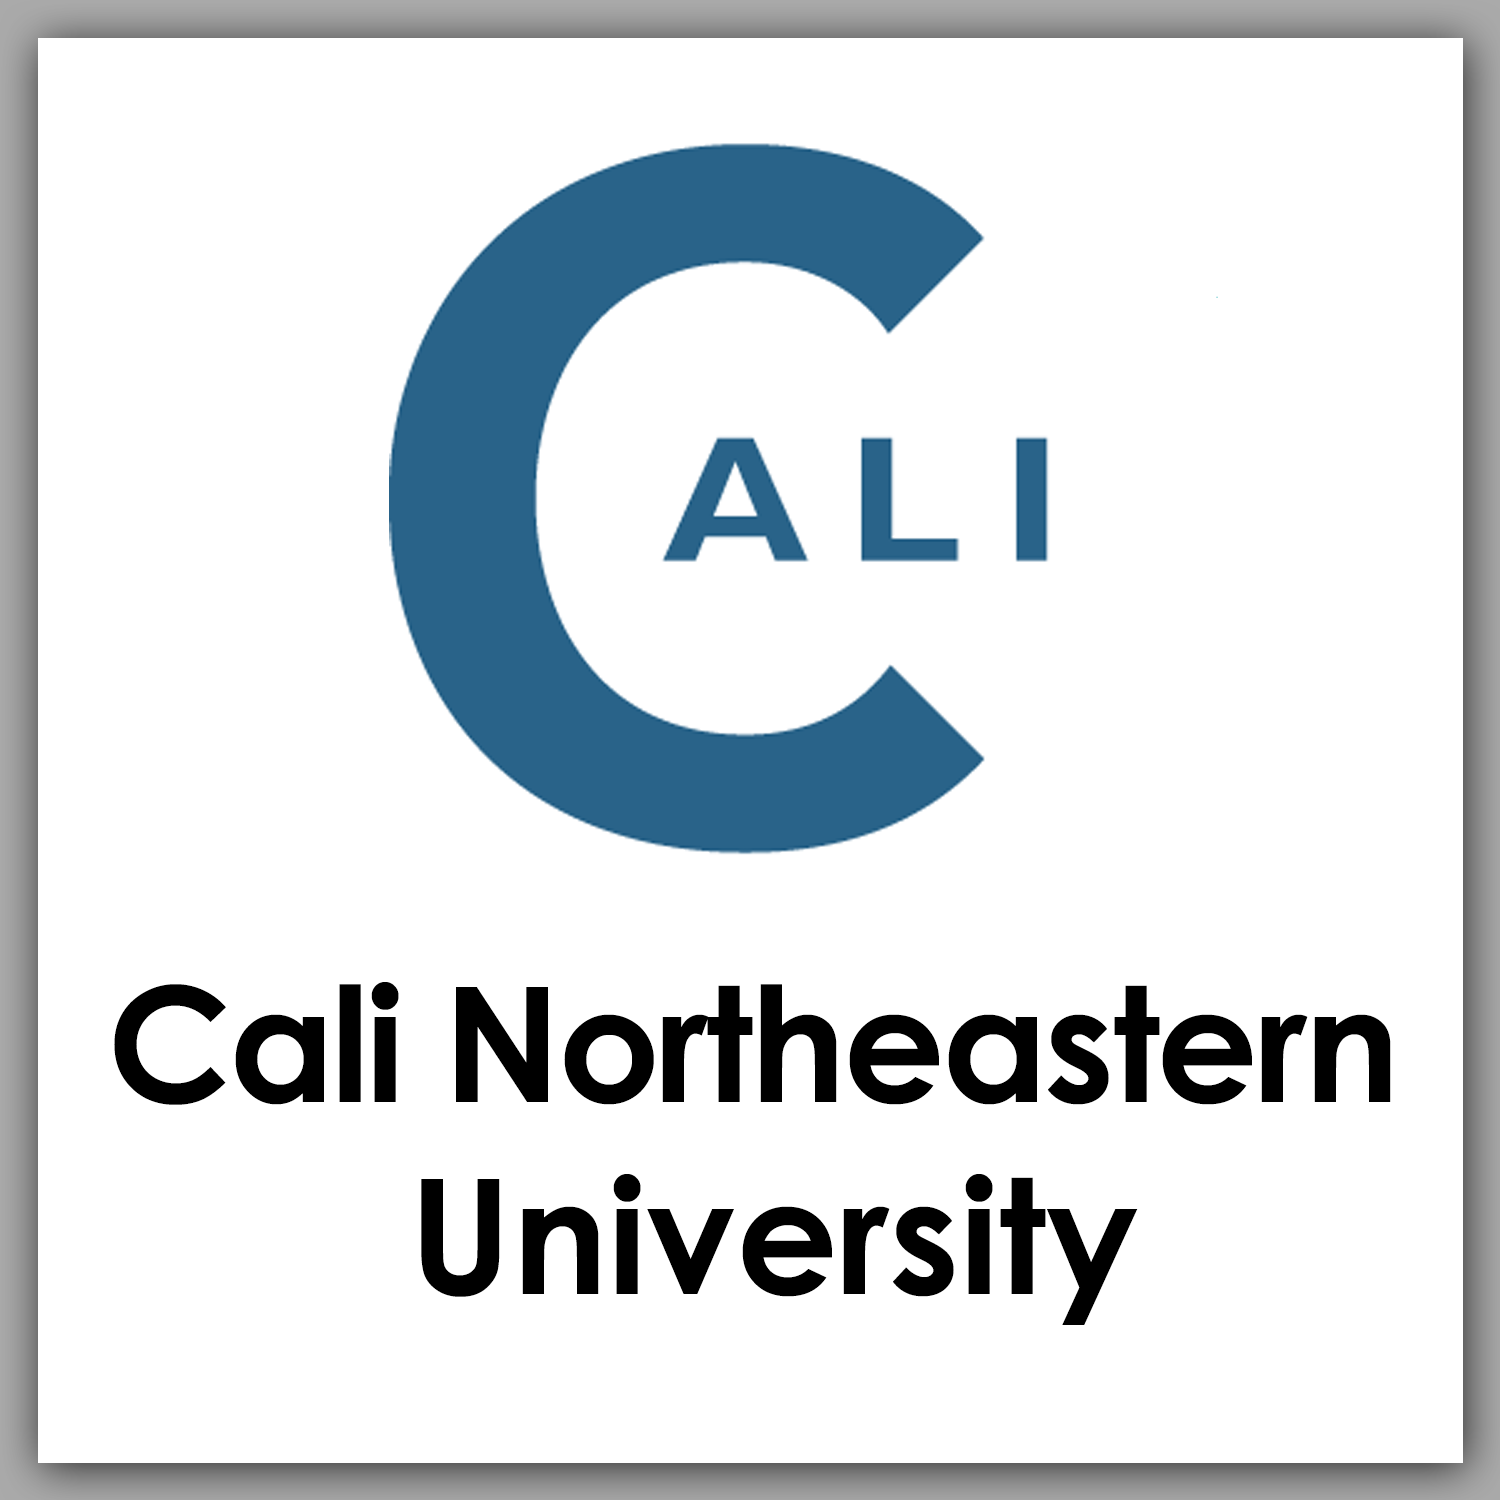 Cali Northeastern University